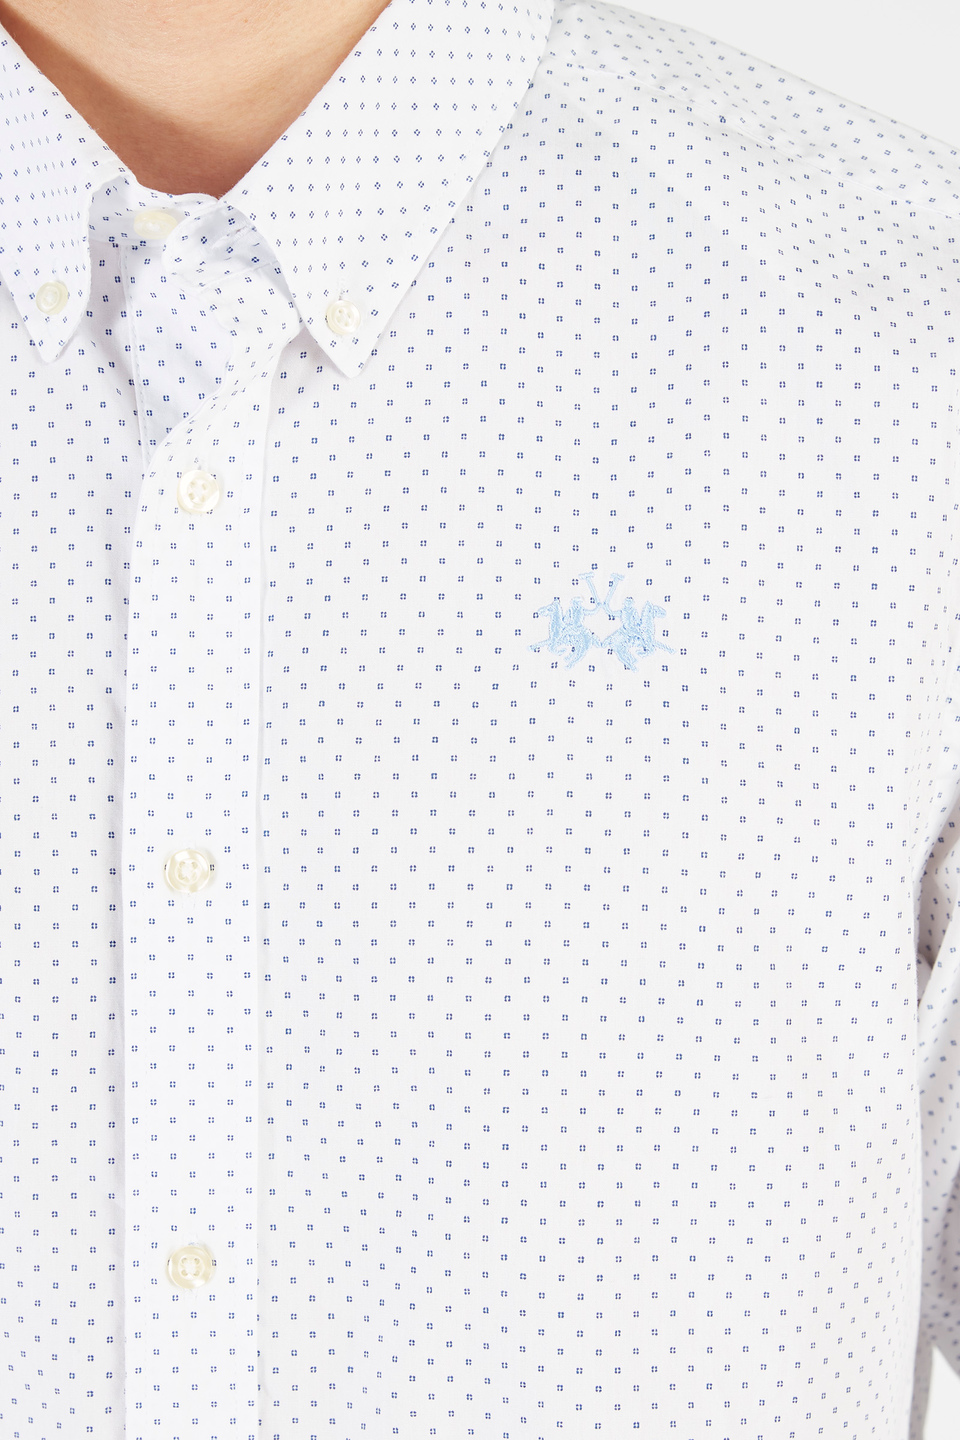 Men’s long sleeve shirt in 100% regular fit cotton | La Martina - Official Online Shop